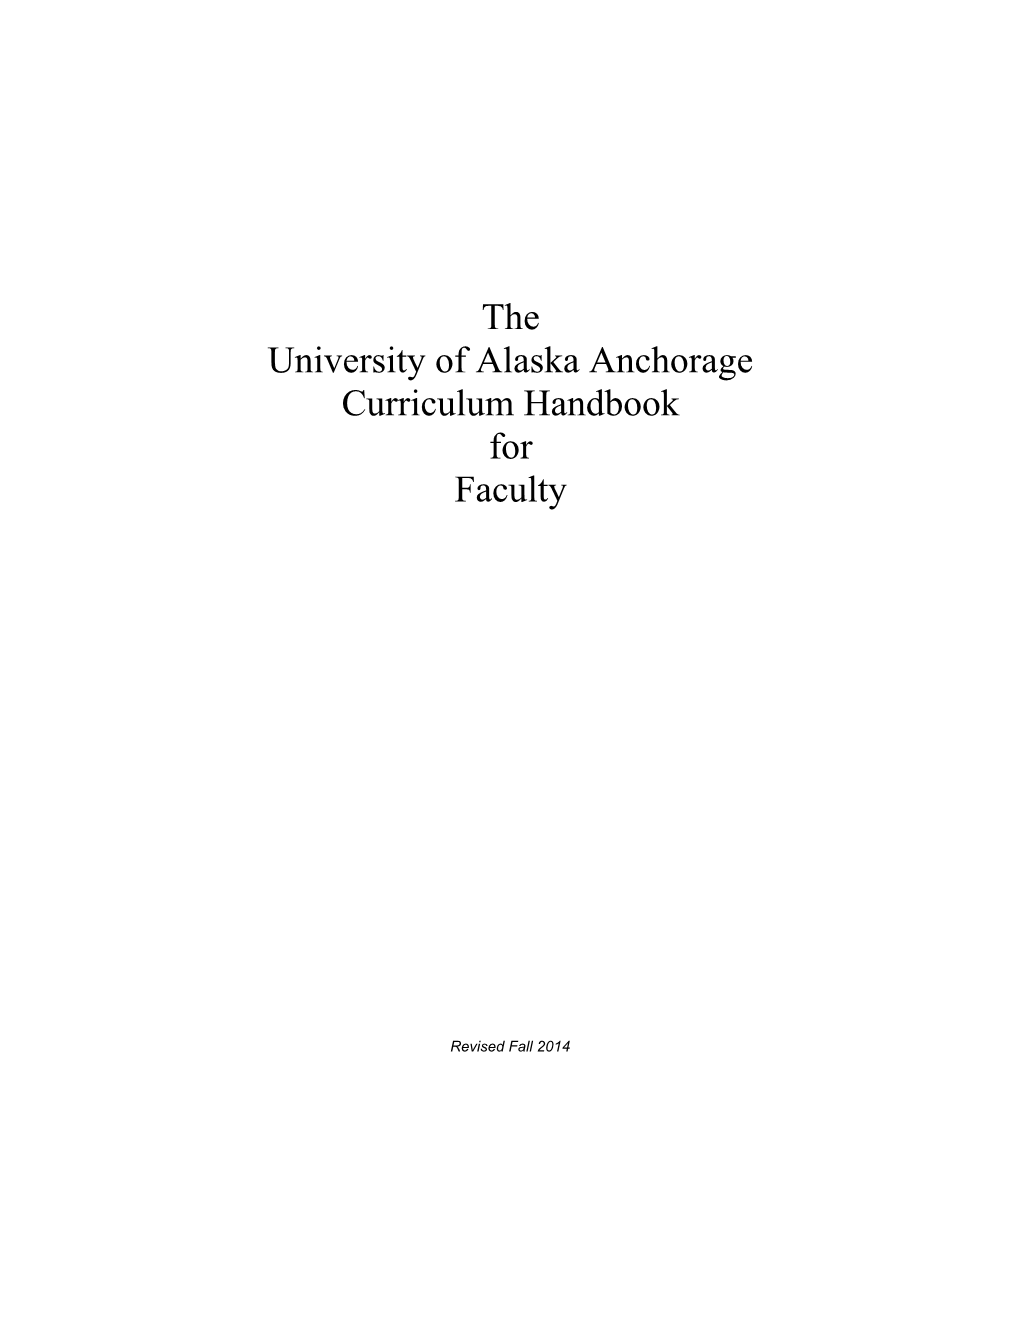 The University of Alaska Anchorage Curriculum Handbook For